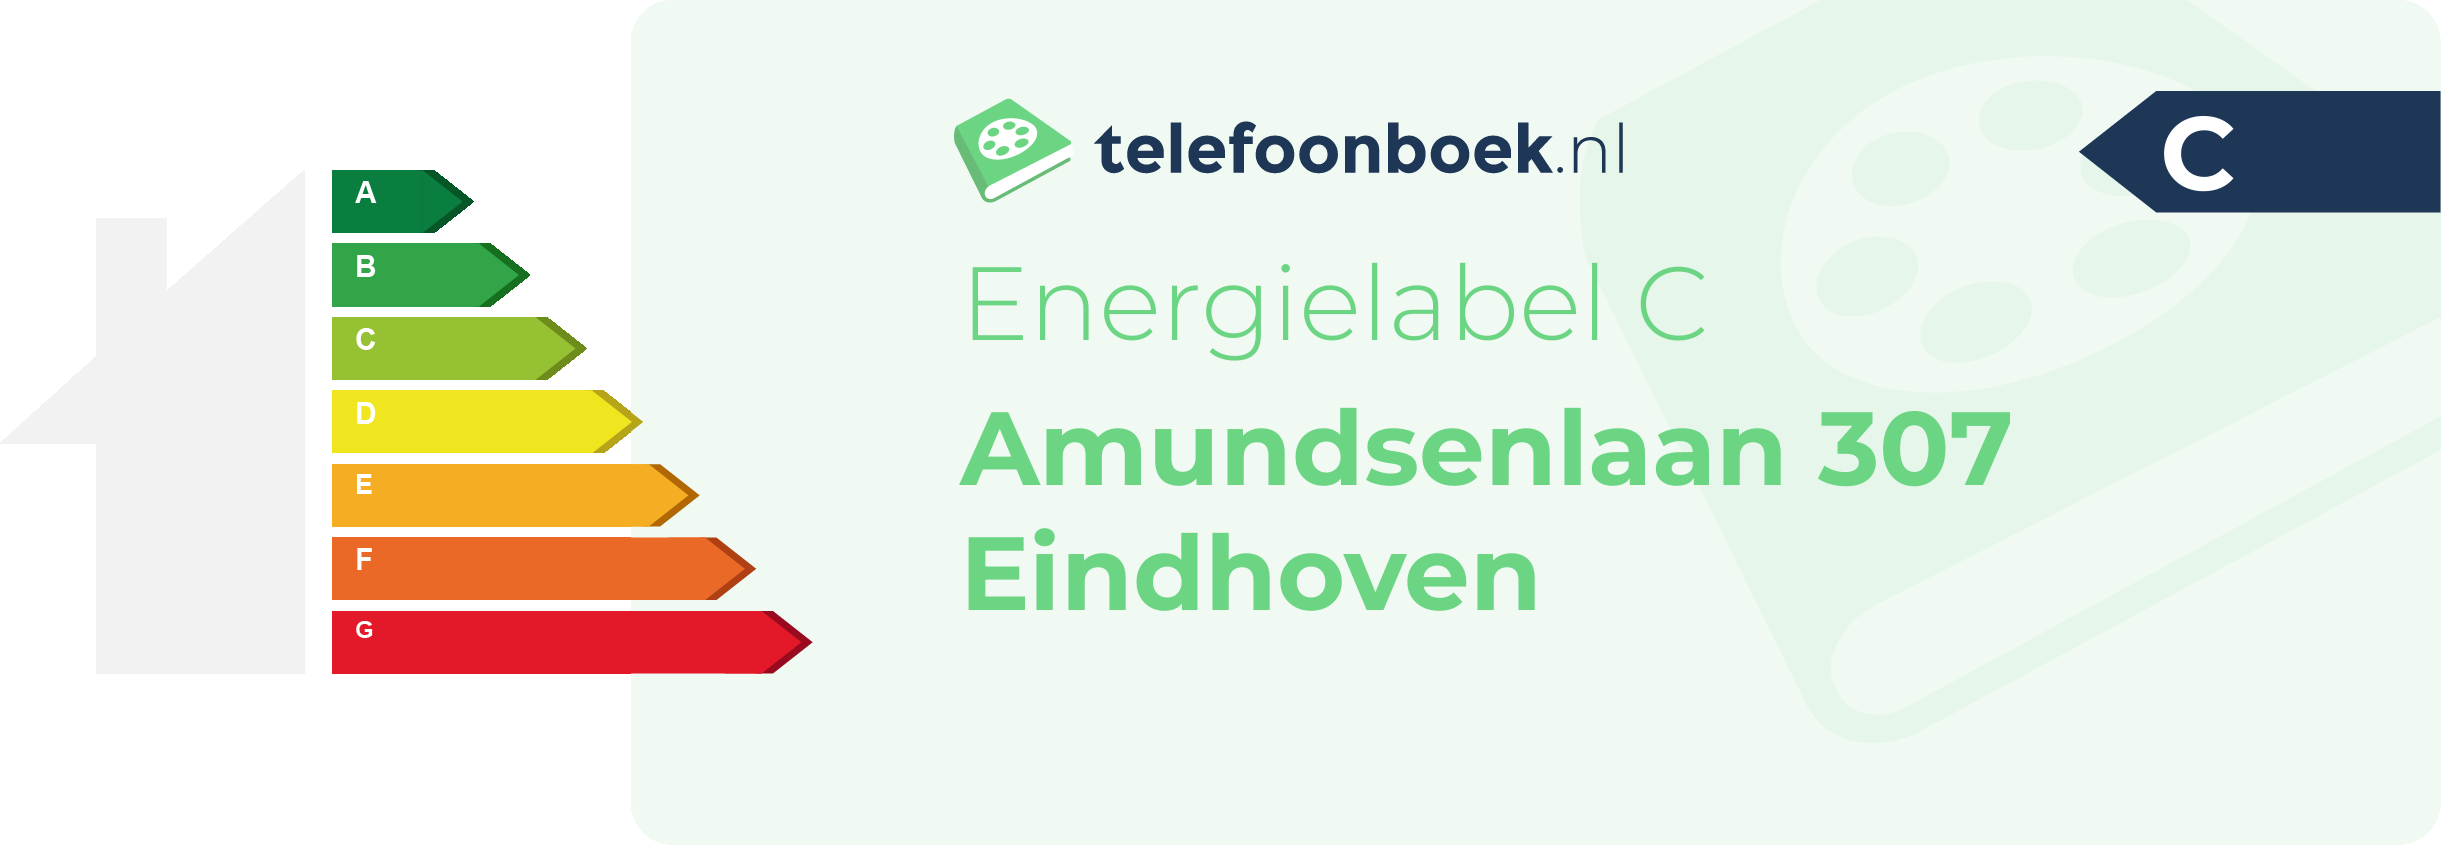 Energielabel Amundsenlaan 307 Eindhoven